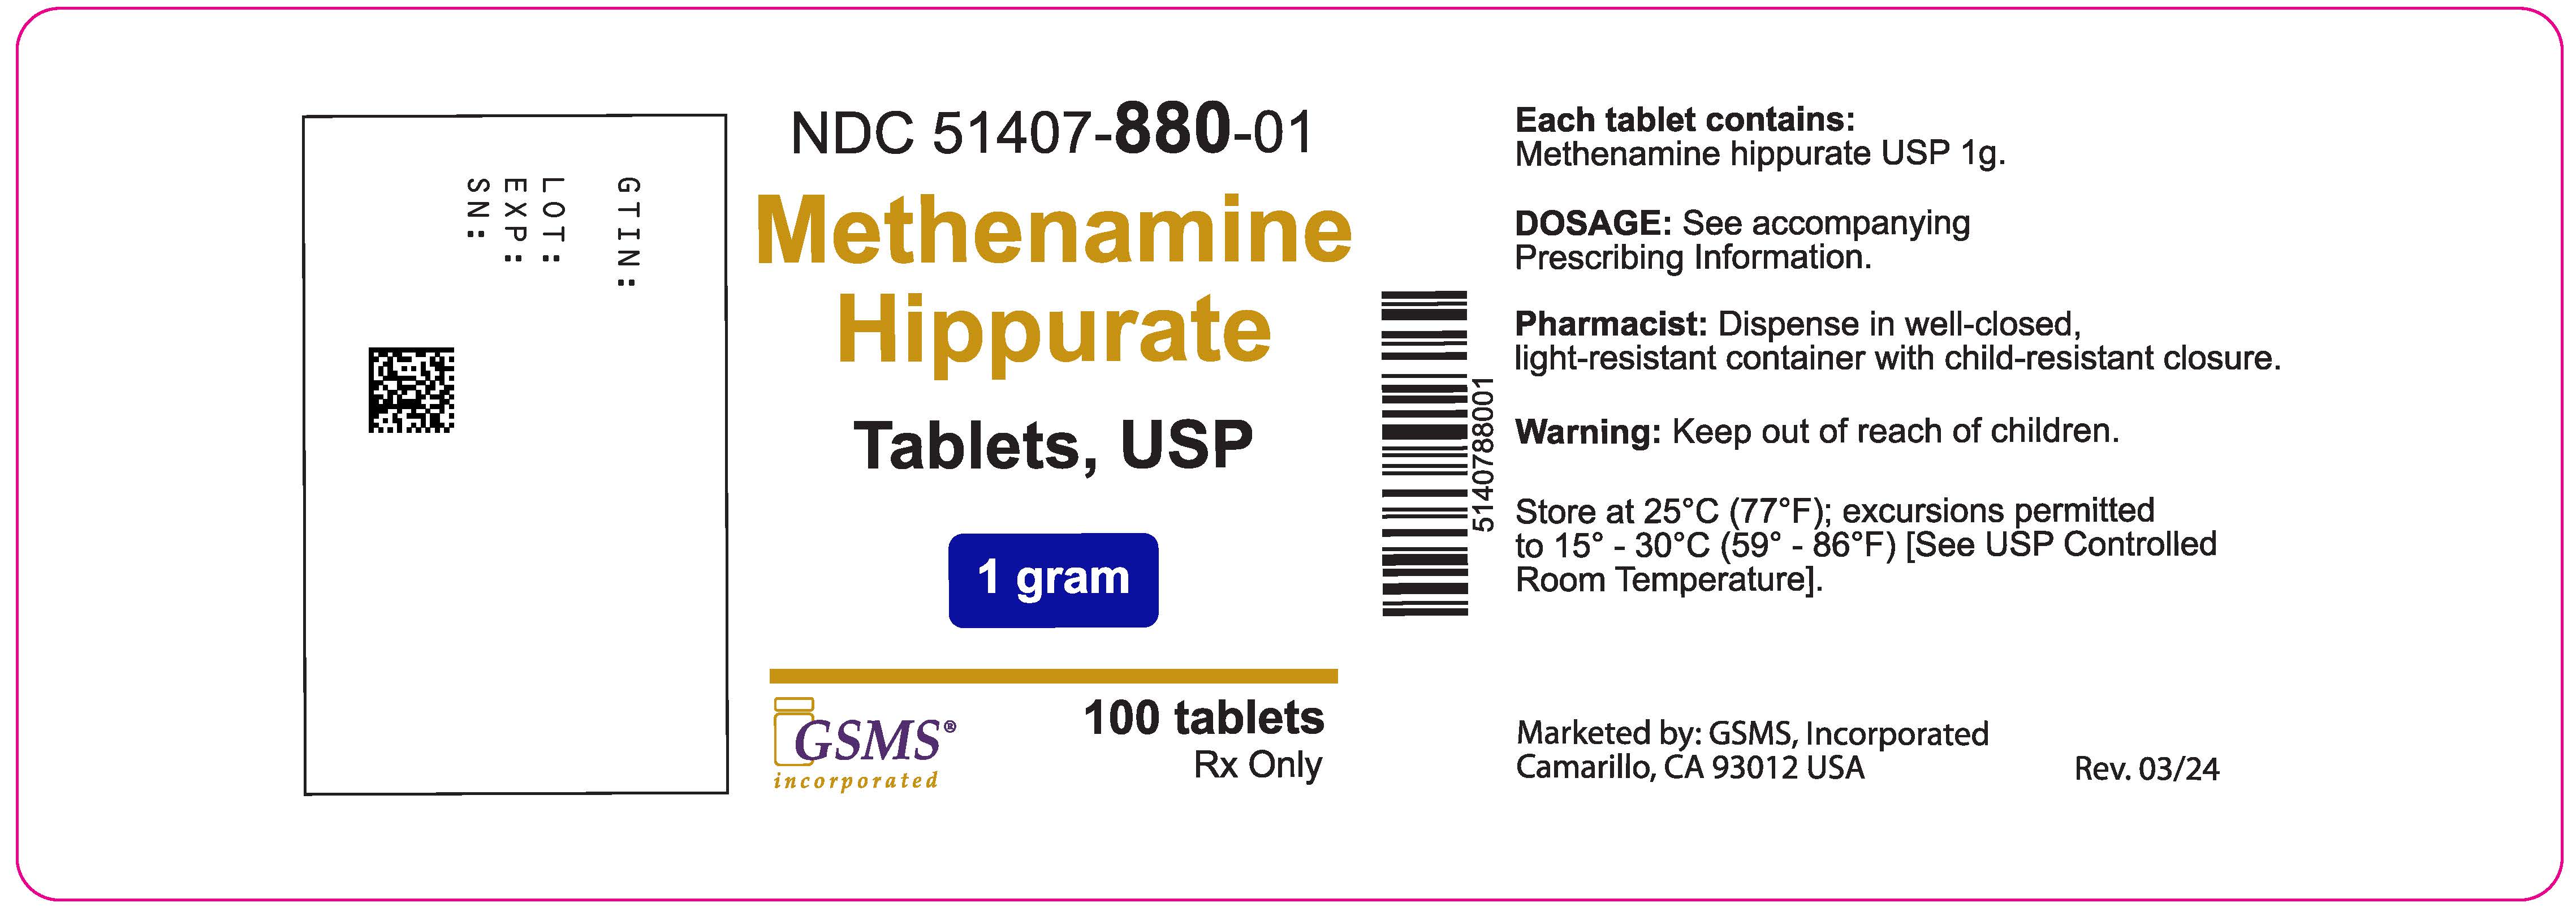 51407-880-01OL - Methenamine Hippurate - Rev. 0324.jpg